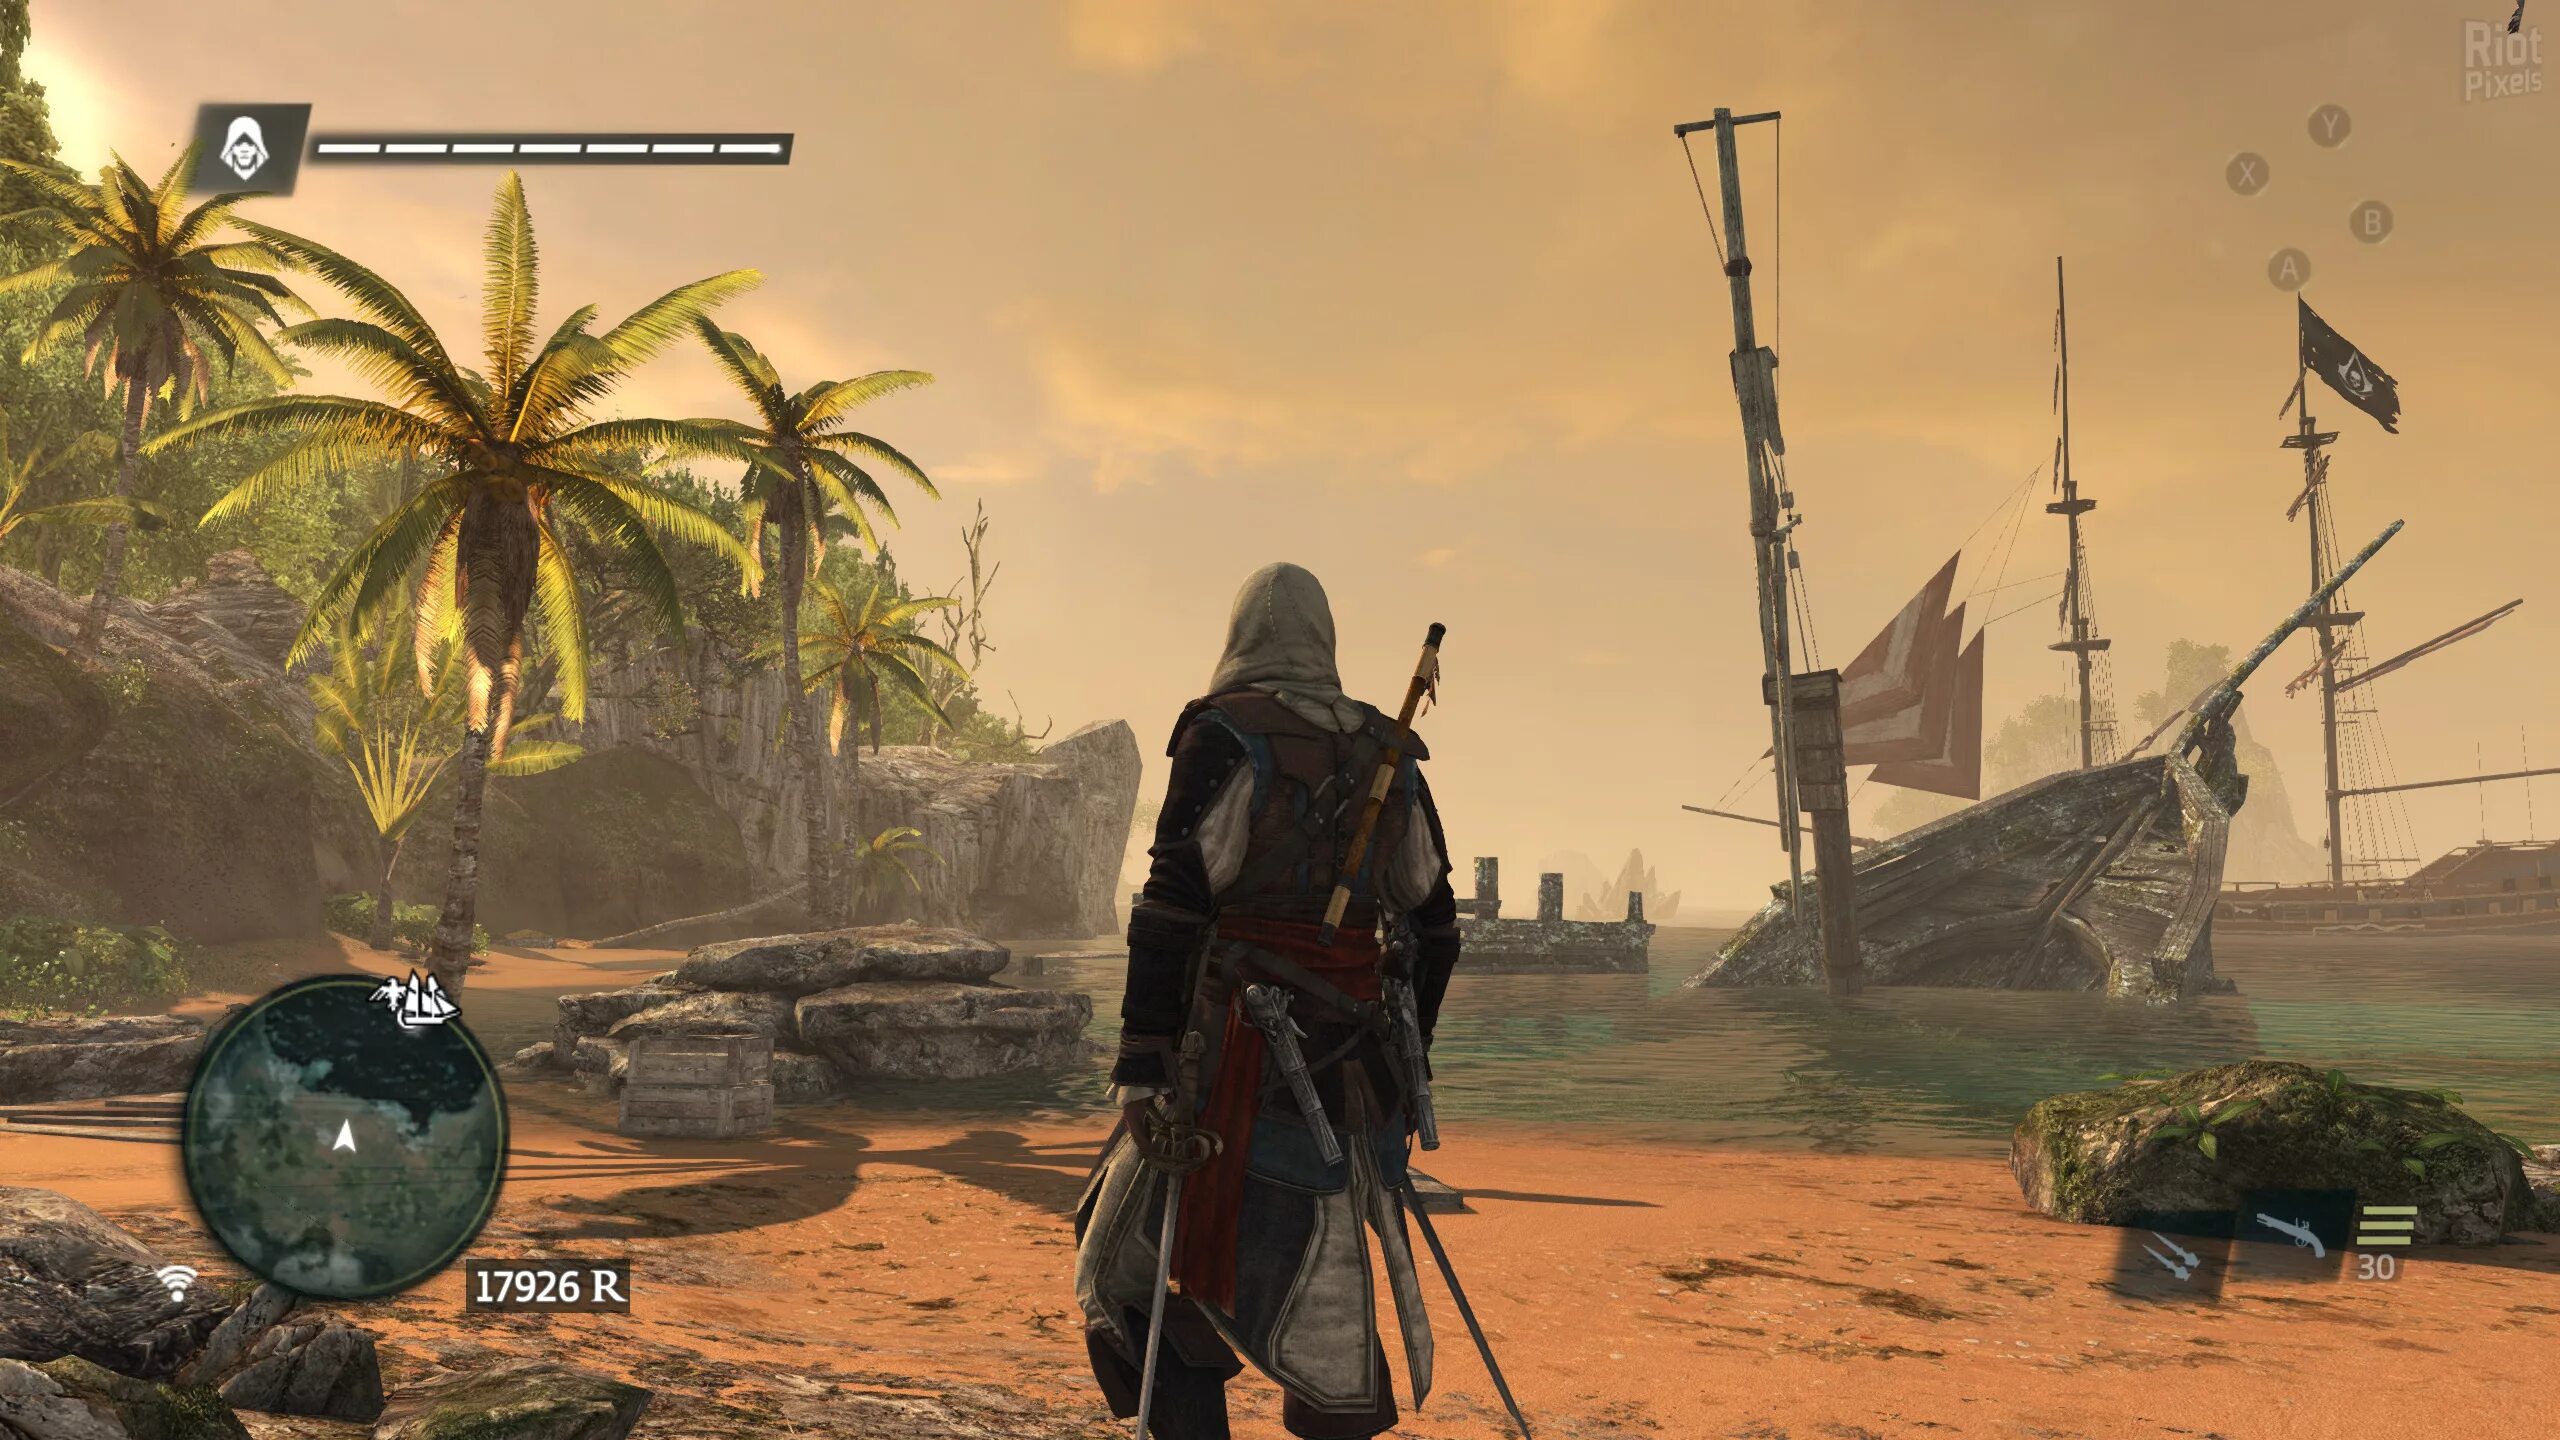 АС 4 Блэк флаг. Assassin’s Creed IV: Black Flag – 2013. Assassins Creed 4 Black Flag screenshots. Assassin's Creed 4 Black Flag Скриншоты. Обновление ассасин крид